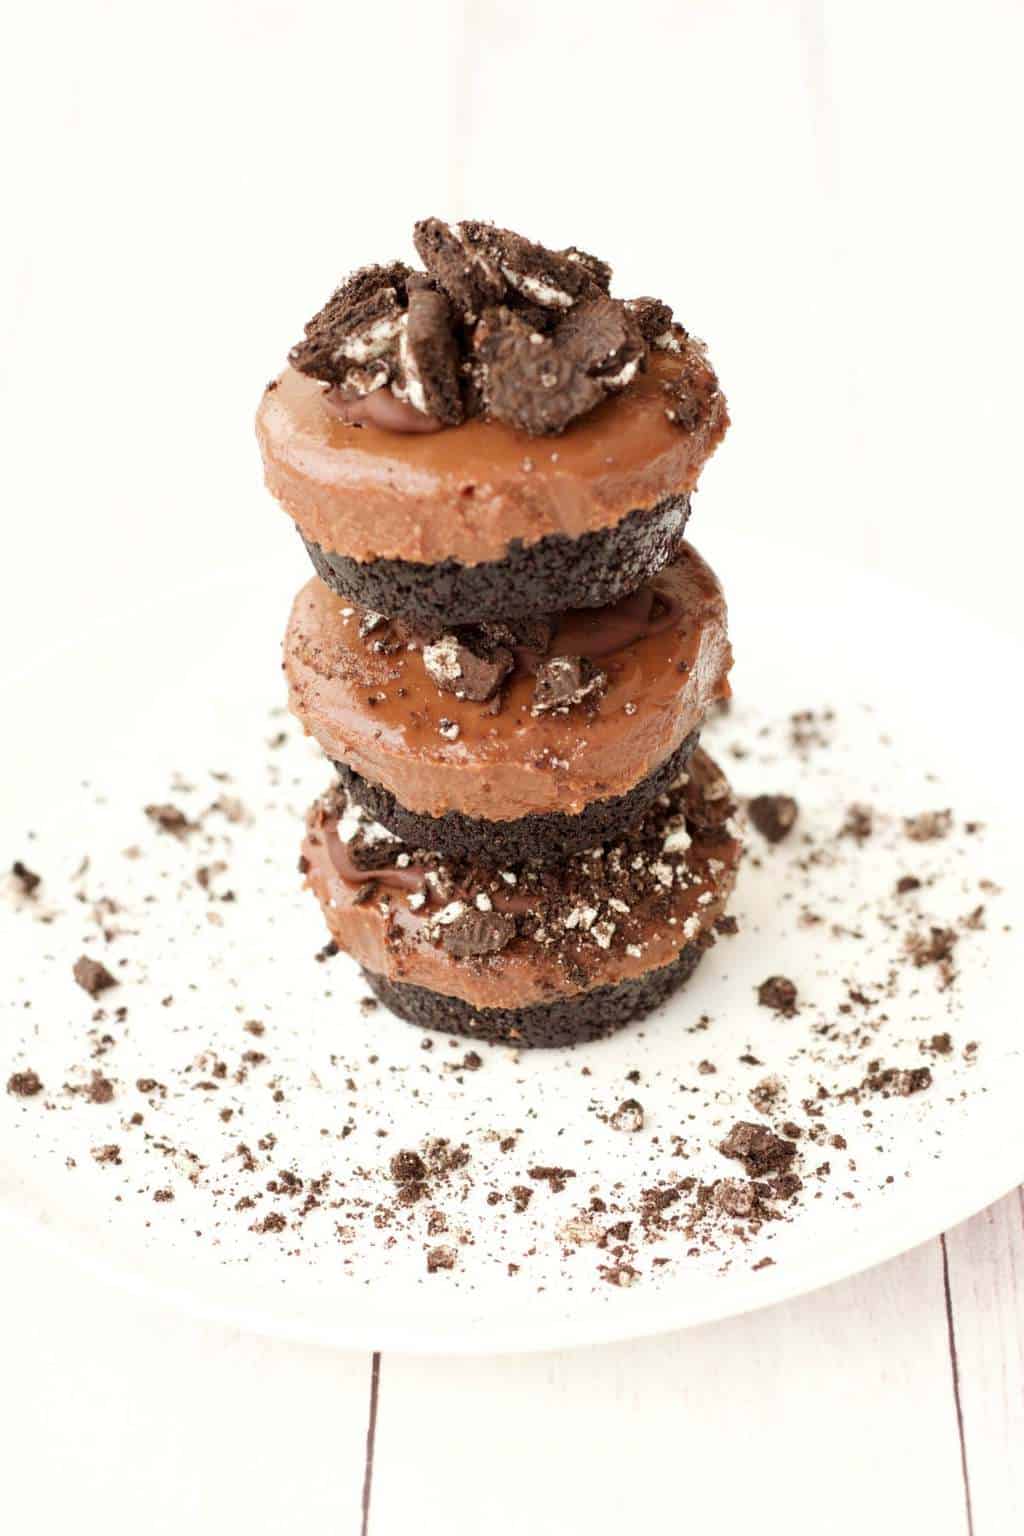 Mini Vegan Sjokolade Cheesecakes #vegan #lovingitvegan #cheesecakes #dessert #dairyfree #oreos